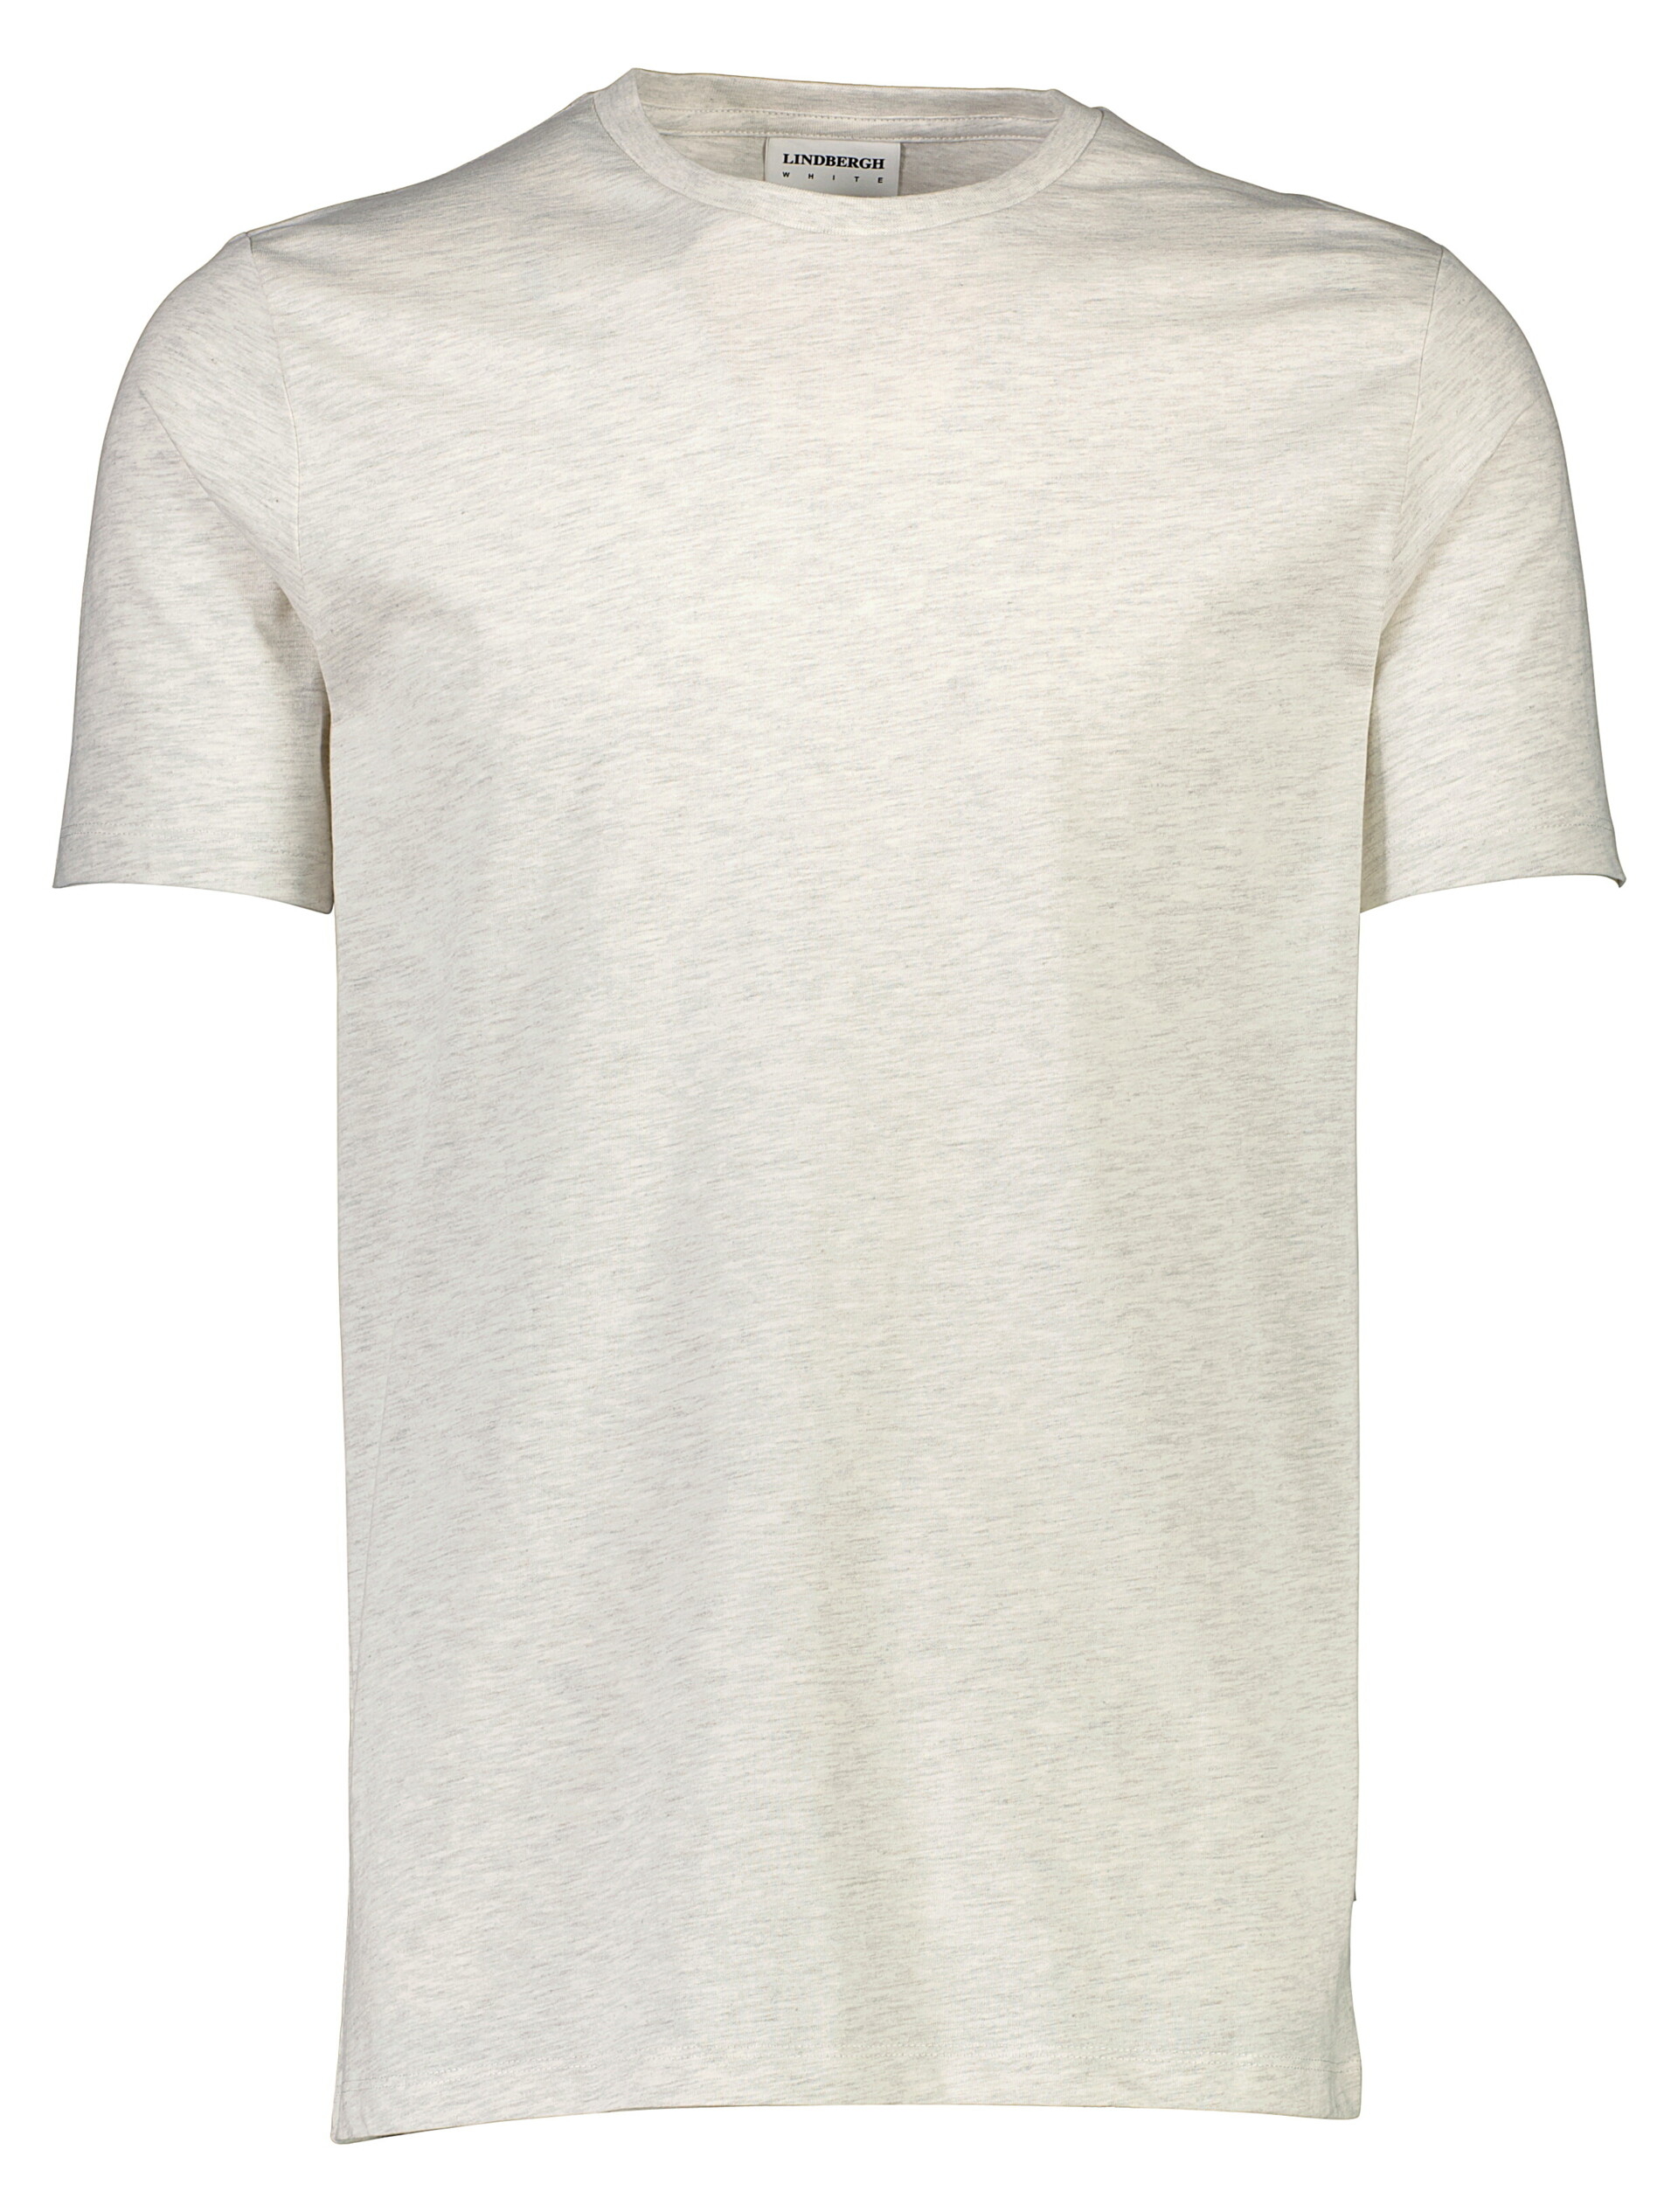 Lindbergh T-shirt wit / off white mel